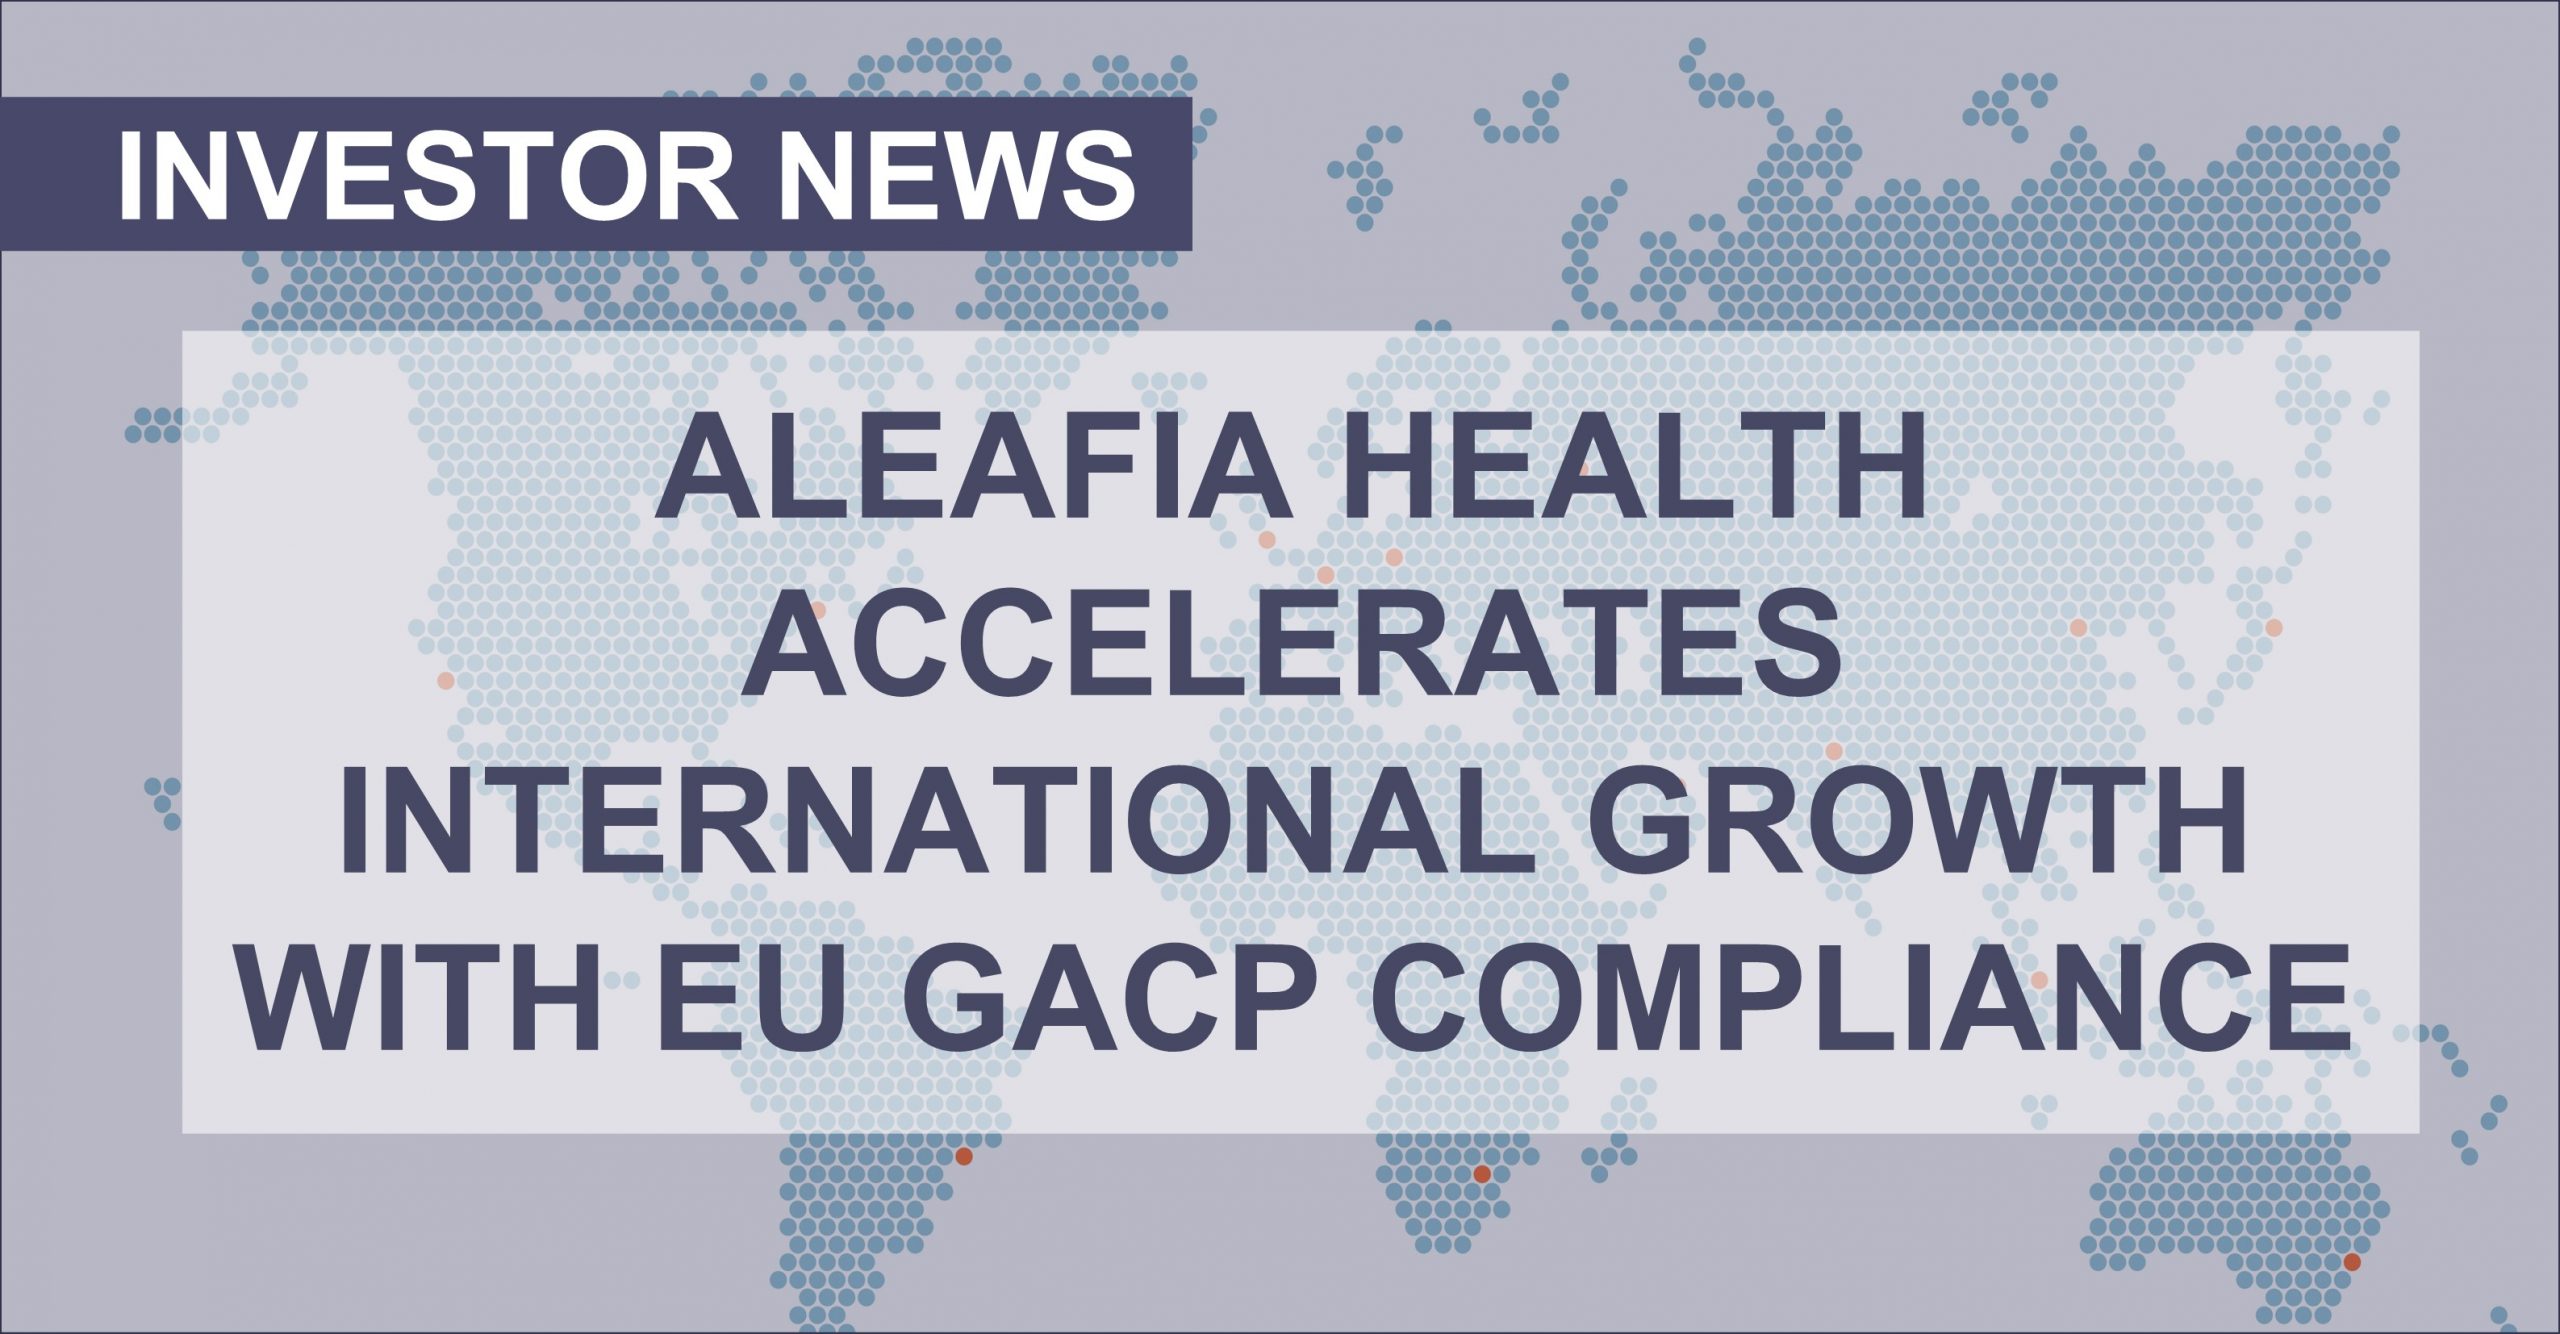 Aleafia Health Niagara Greenhouse Deemed EU GACP Compliant, Accelerating International Growth